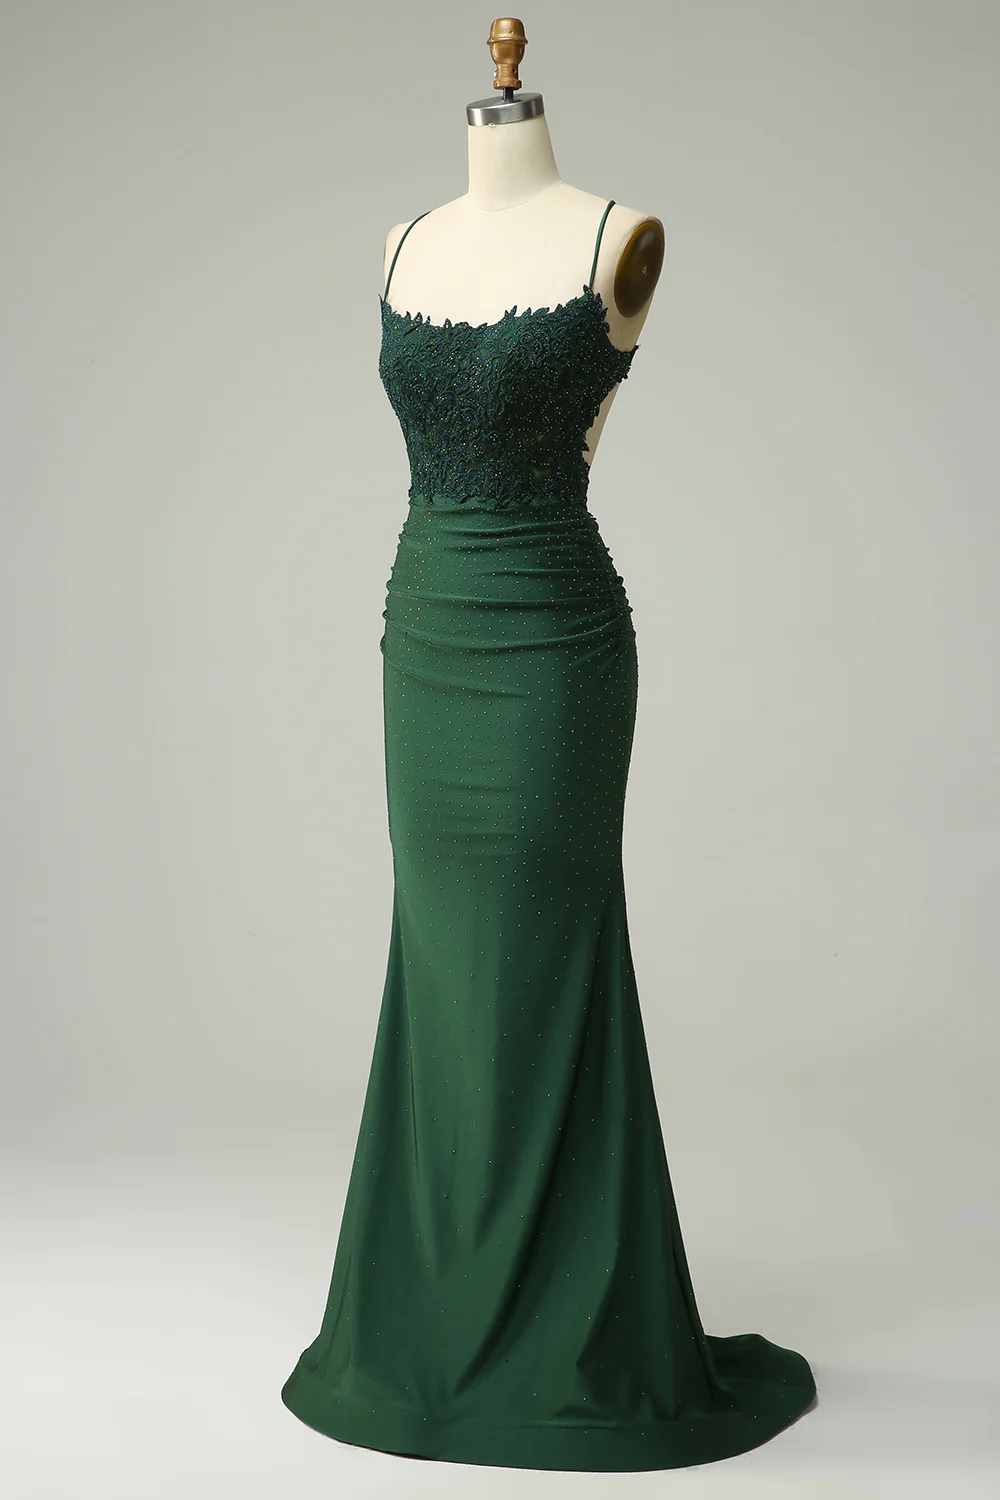 Mermaid Halter Dark Green Long Prom Dress with Appliques Beading Y2989